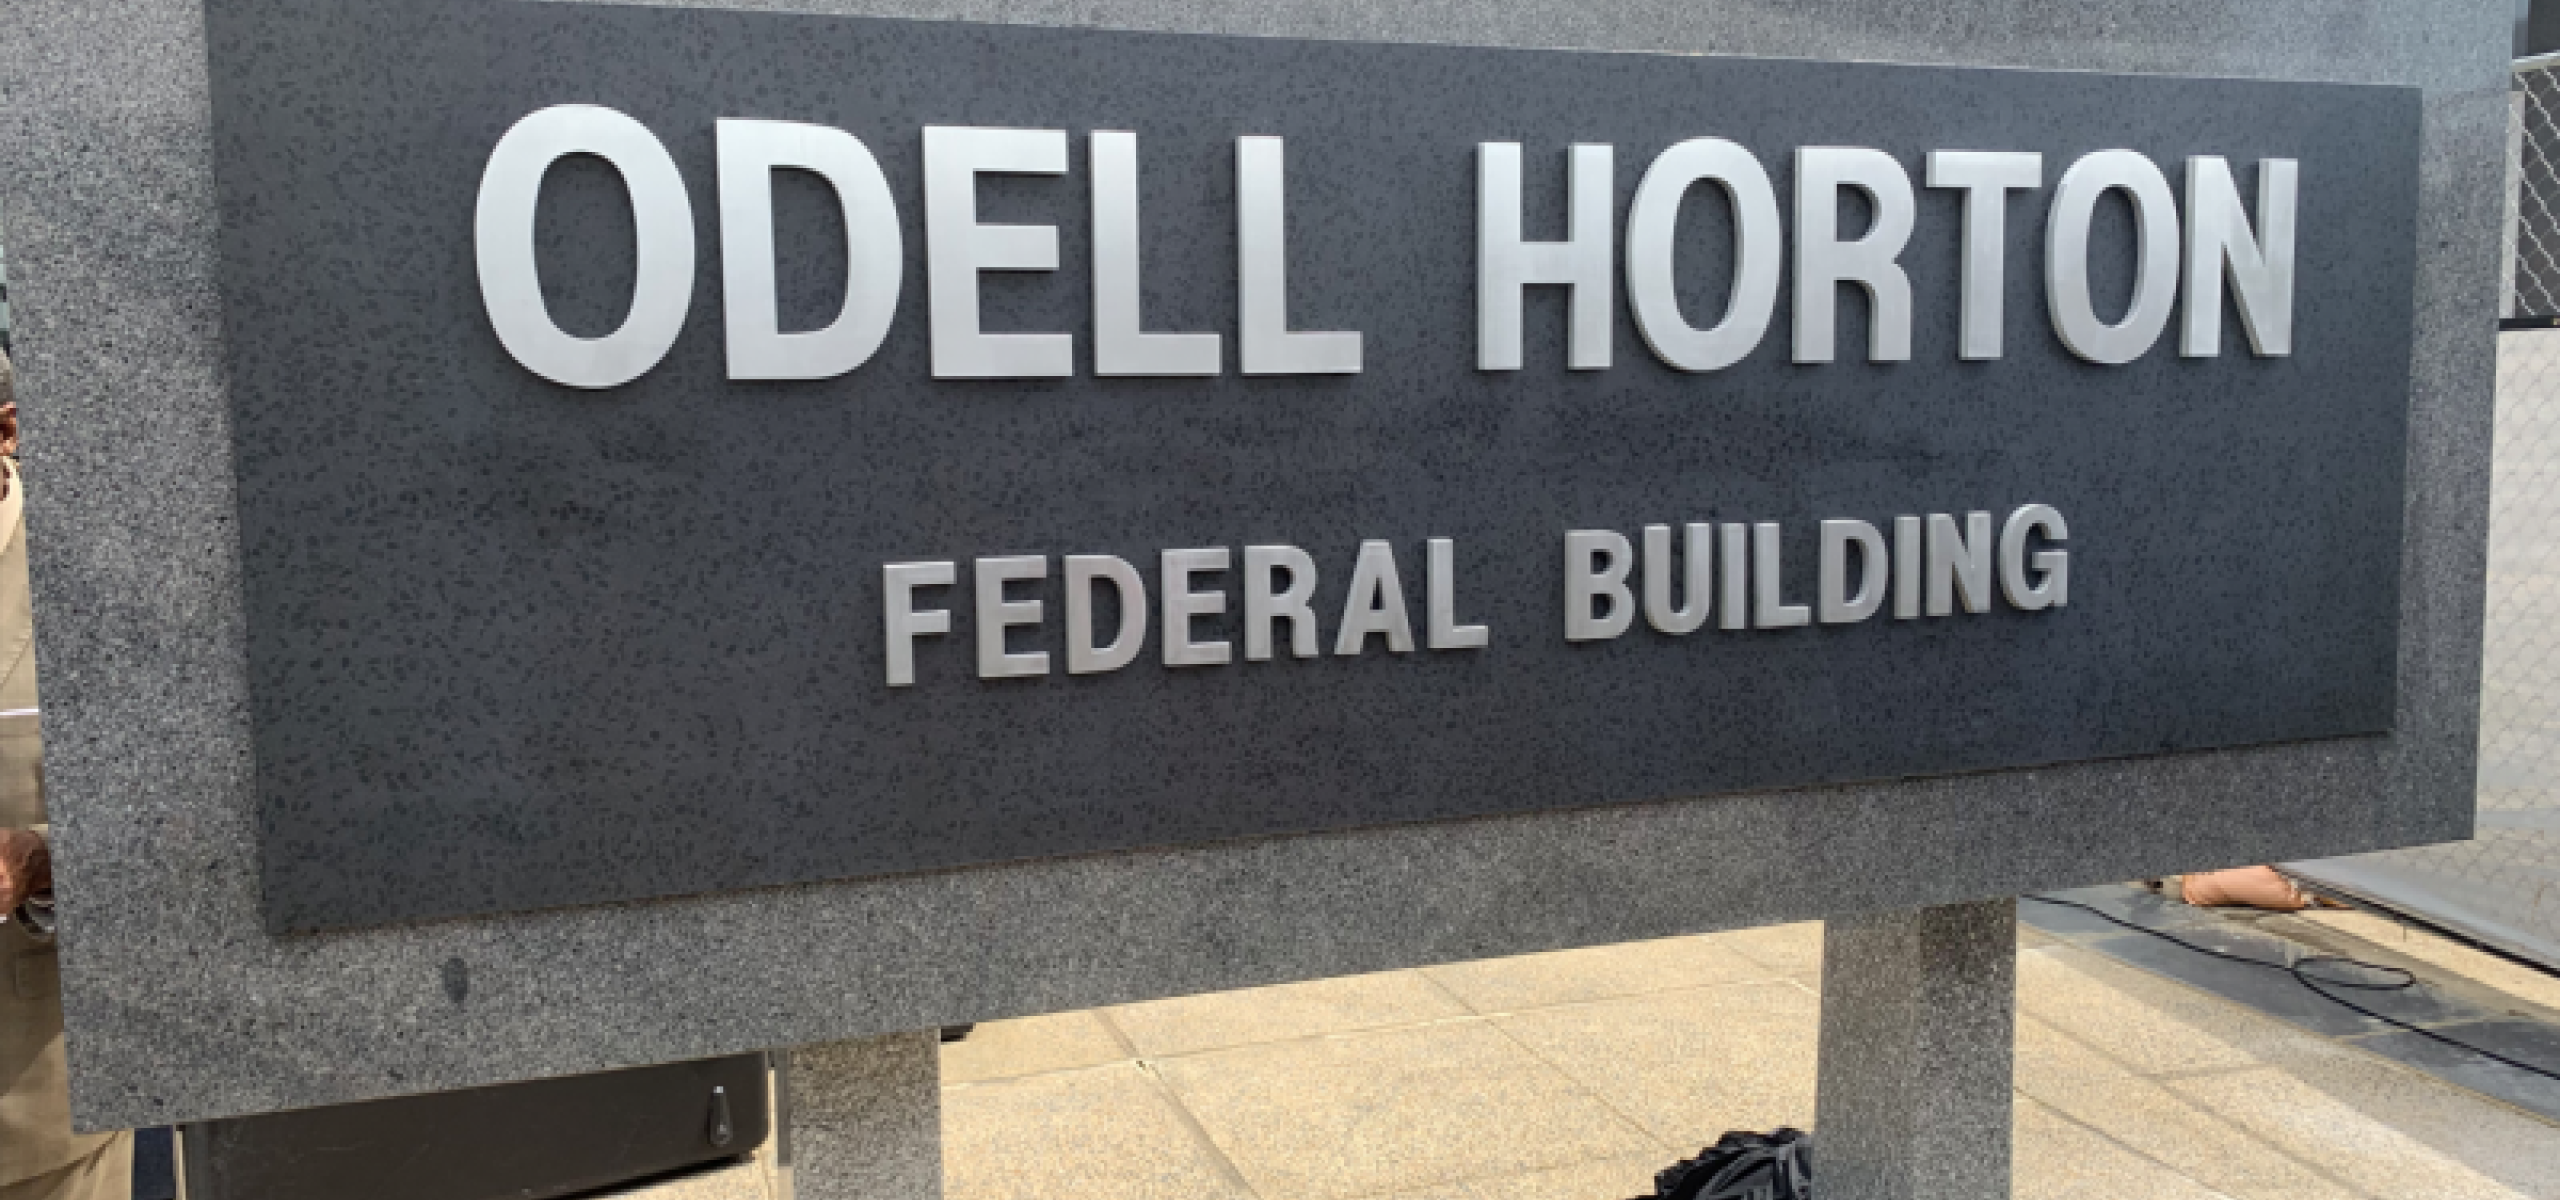 Odell Horton Federal Building sign